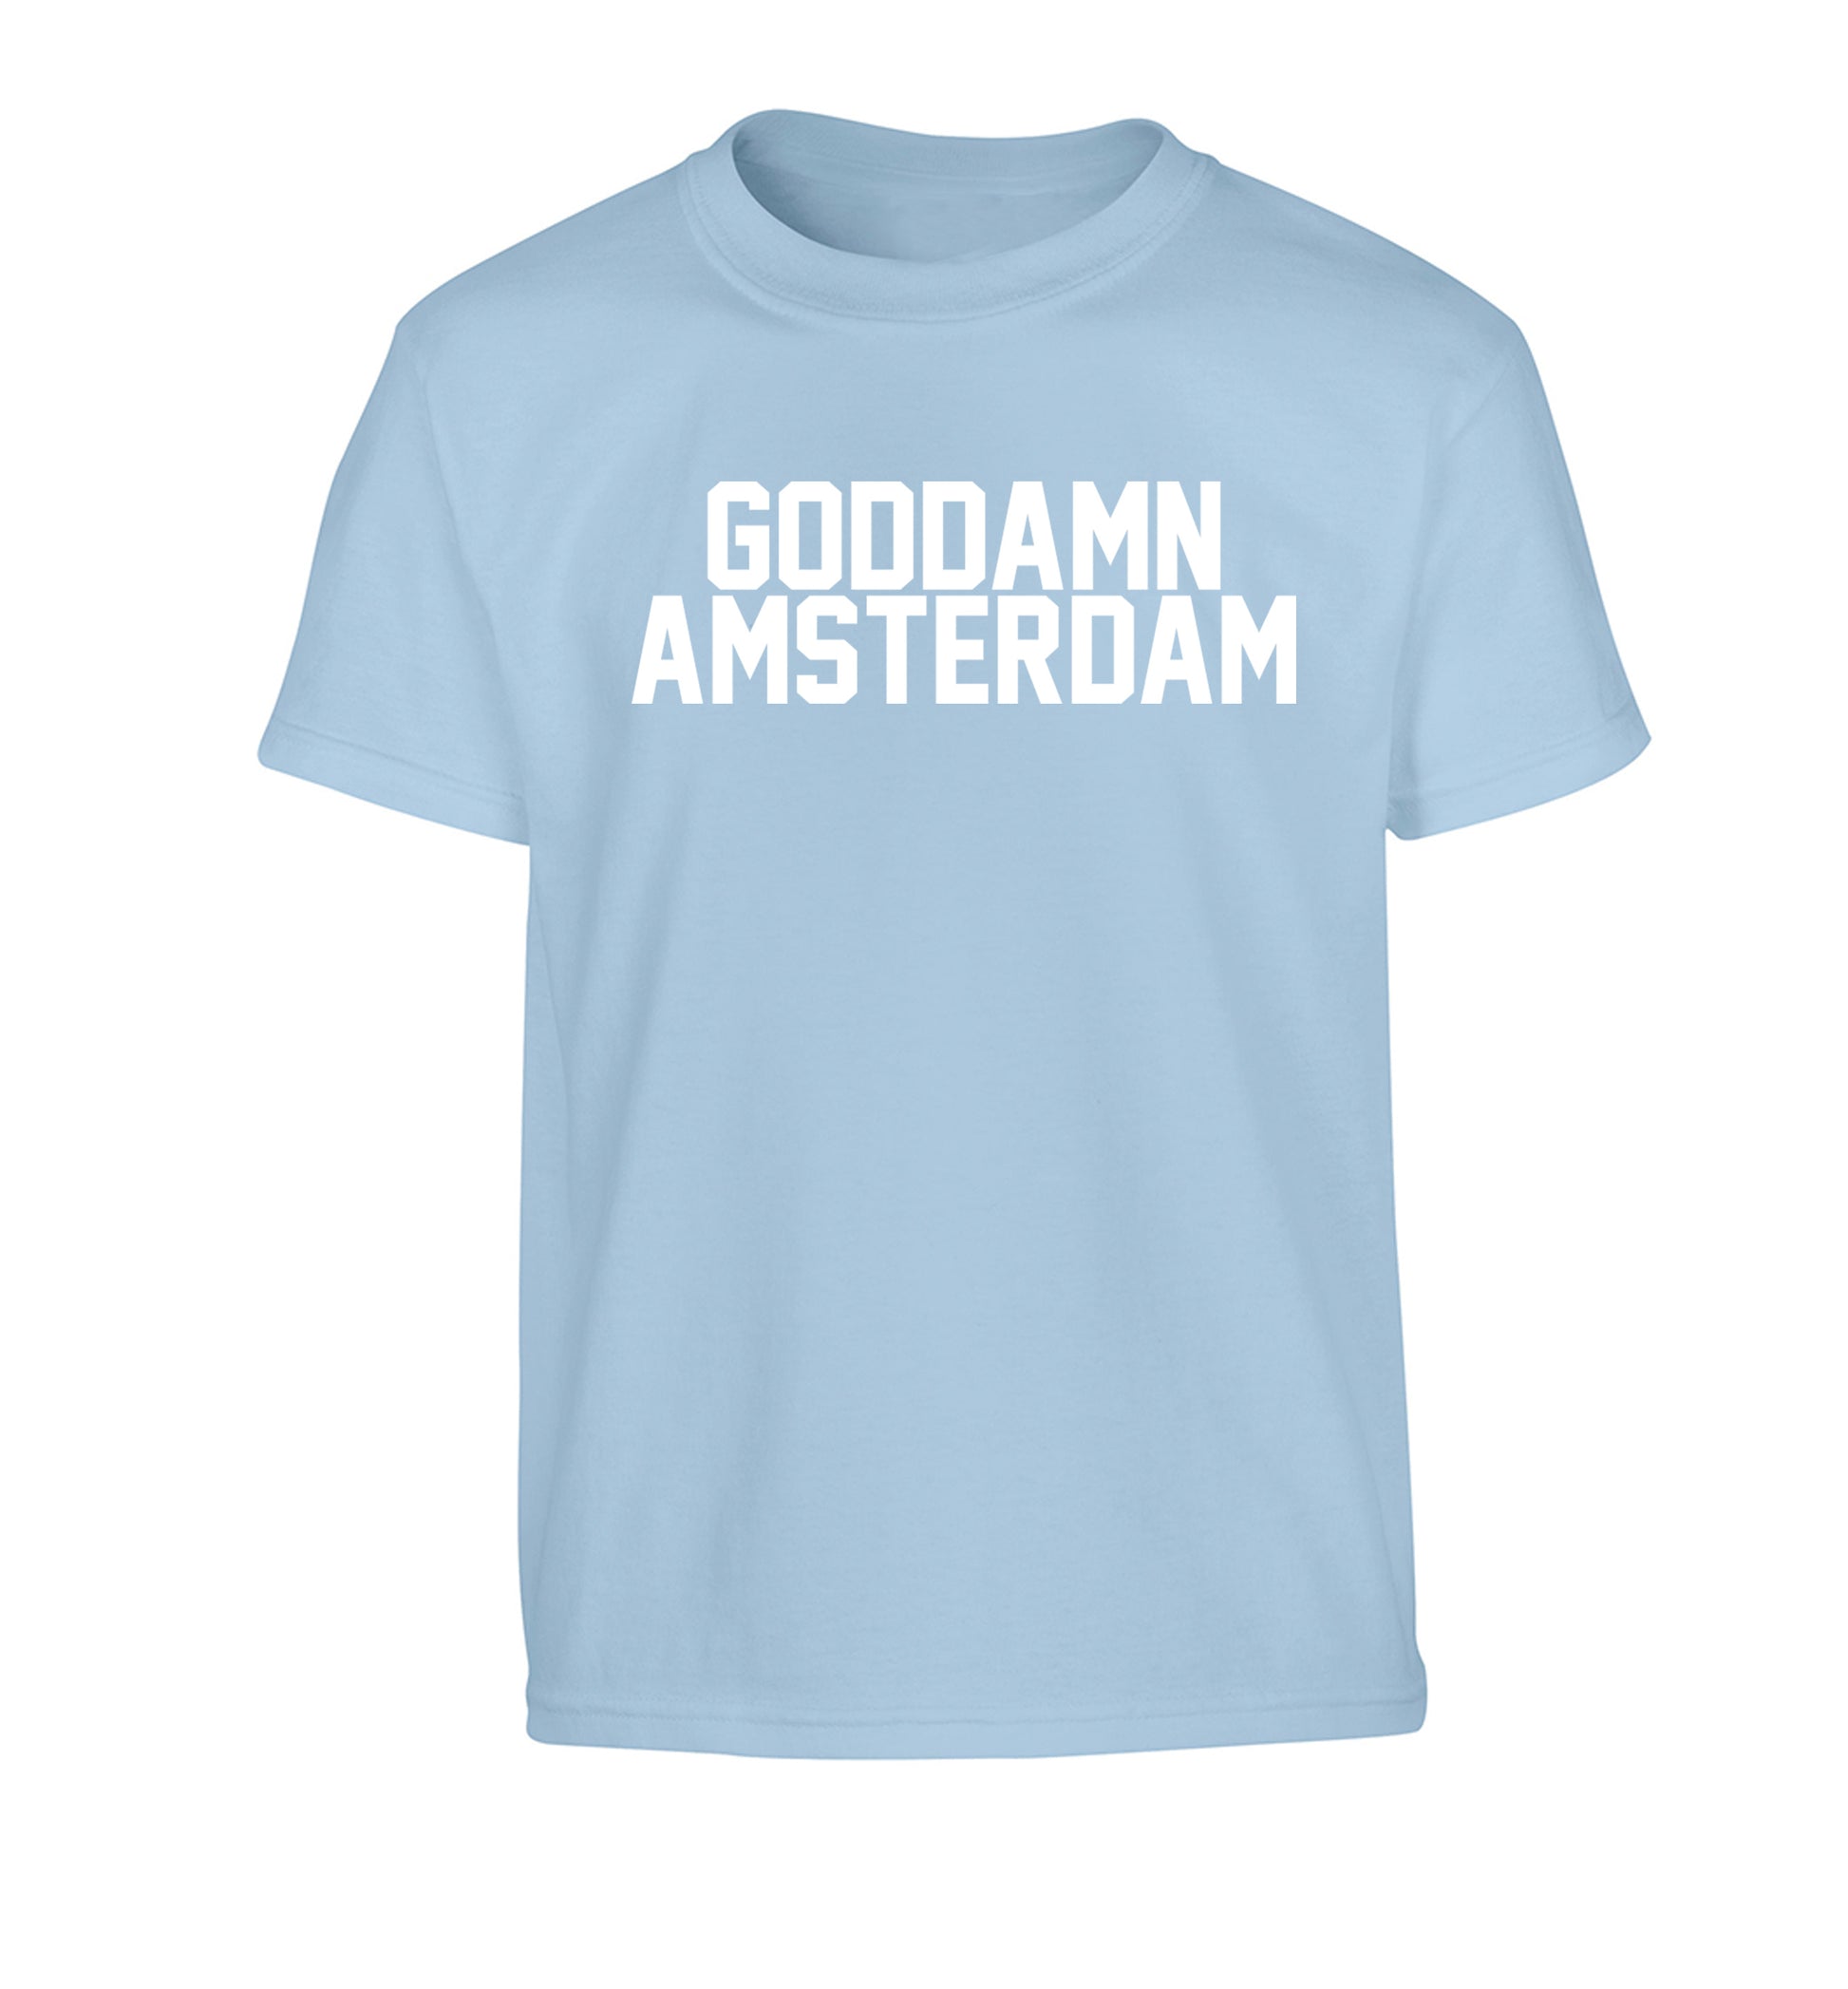 Goddamn Amsterdam Children's light blue Tshirt 12-13 Years